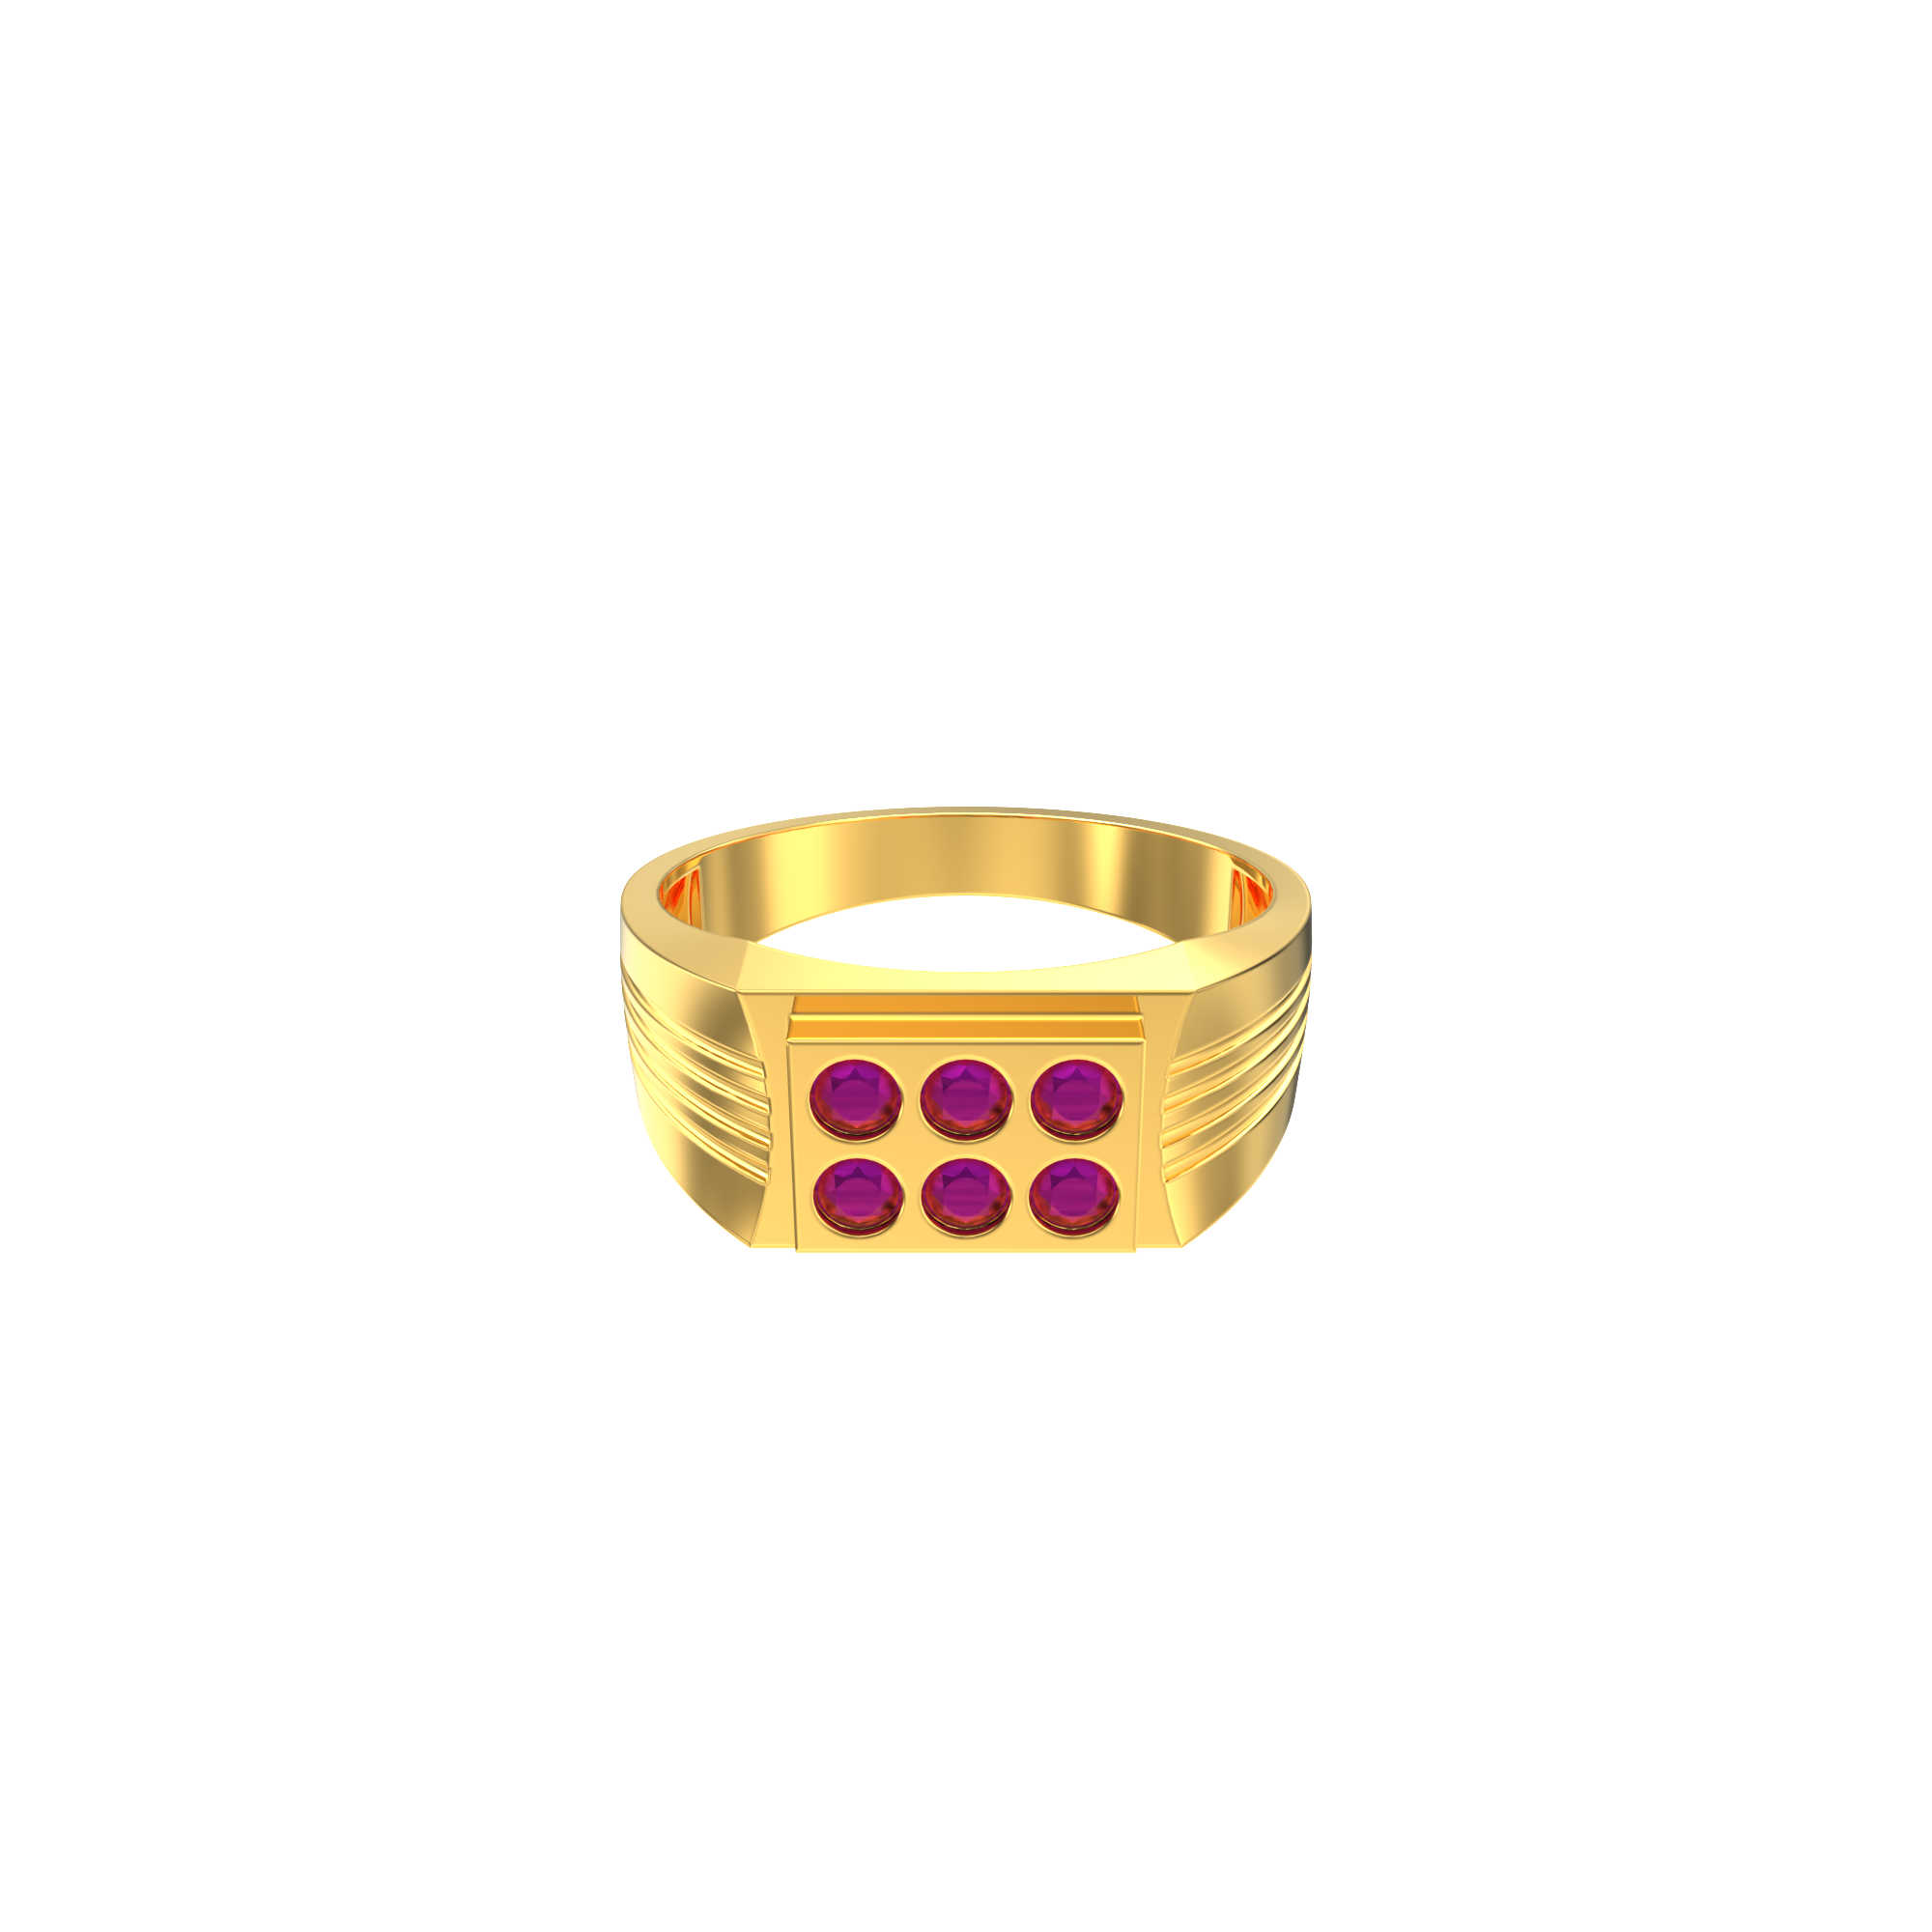 Rectangular Gold Ring for Male